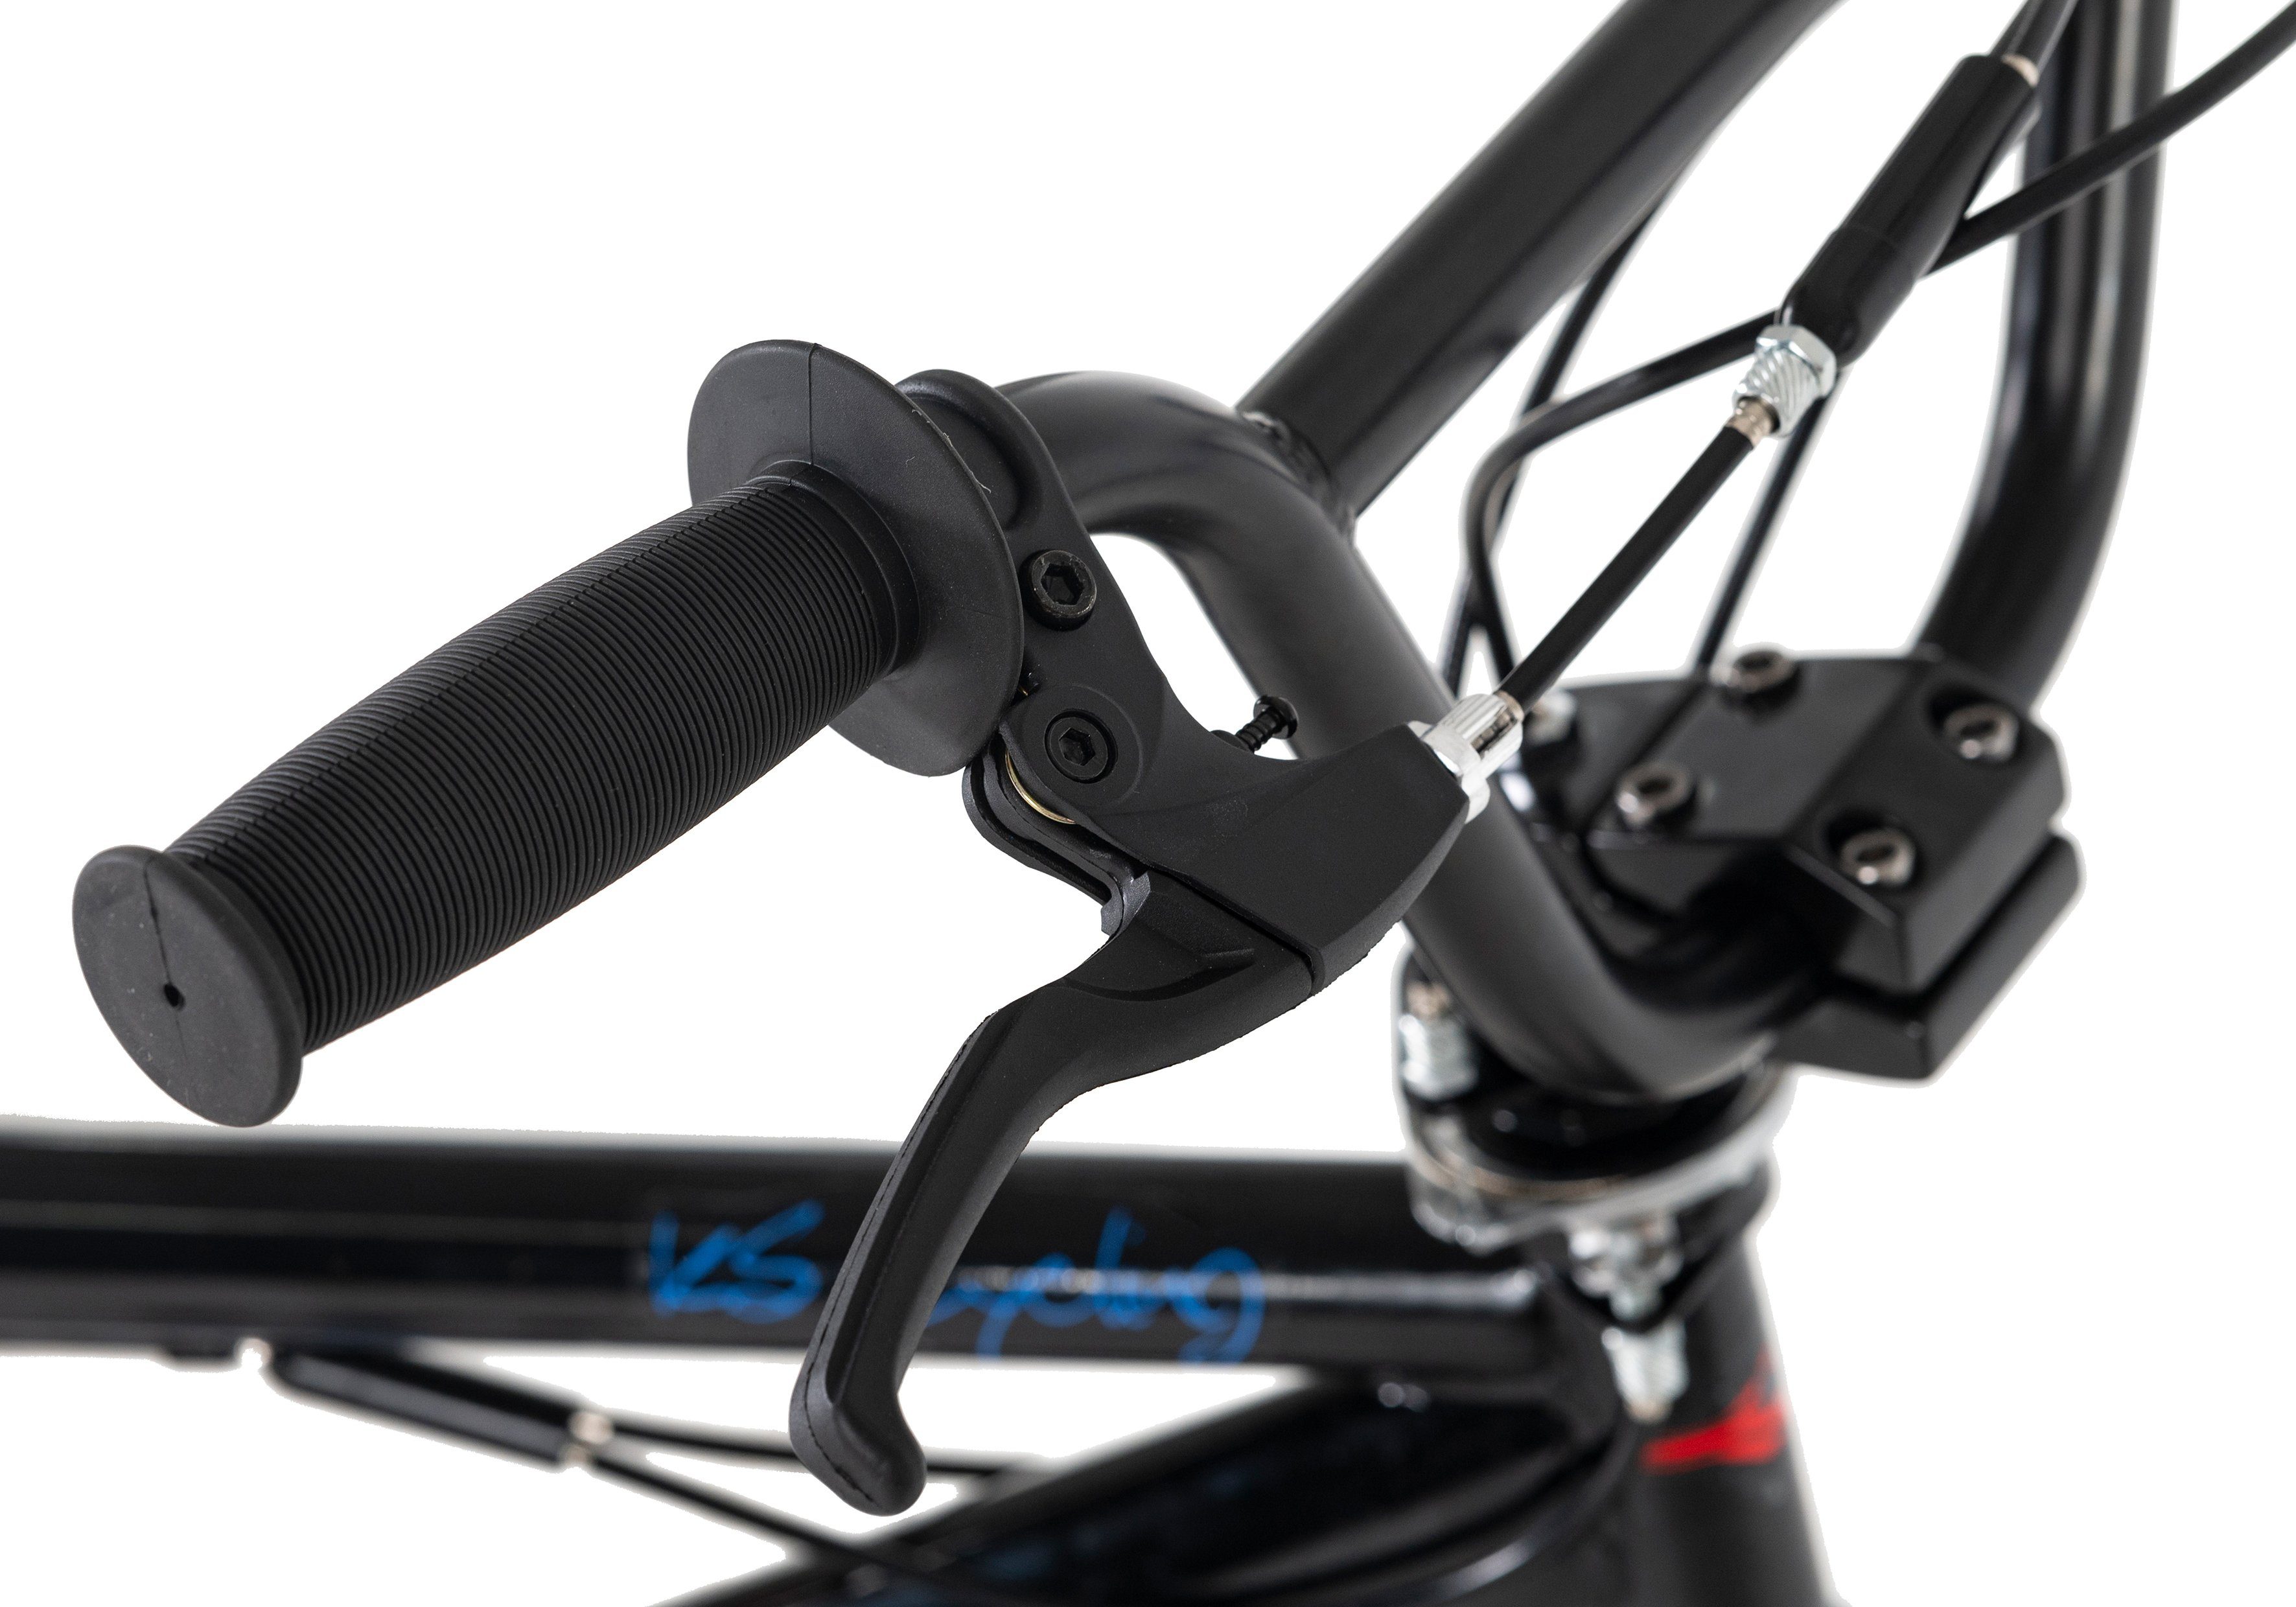 Cycling KS 1 BMX-Rad ohne Gang, Rise, Schaltung